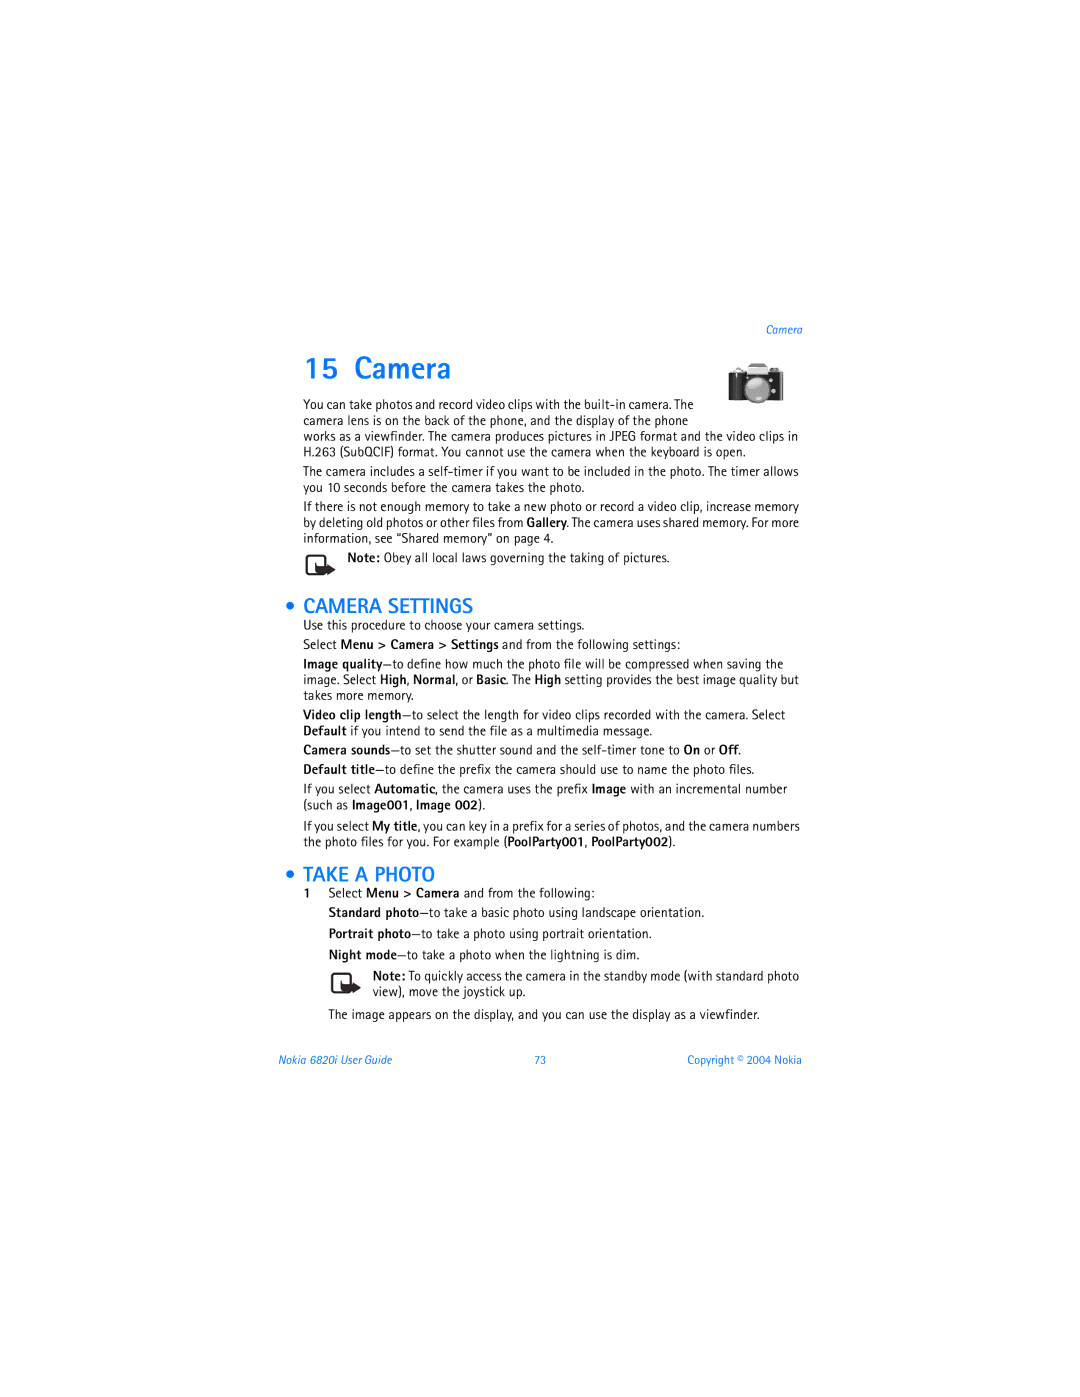 Nokia 6820i warranty Camera Settings, Take a Photo, Select Menu Camera and from the following 